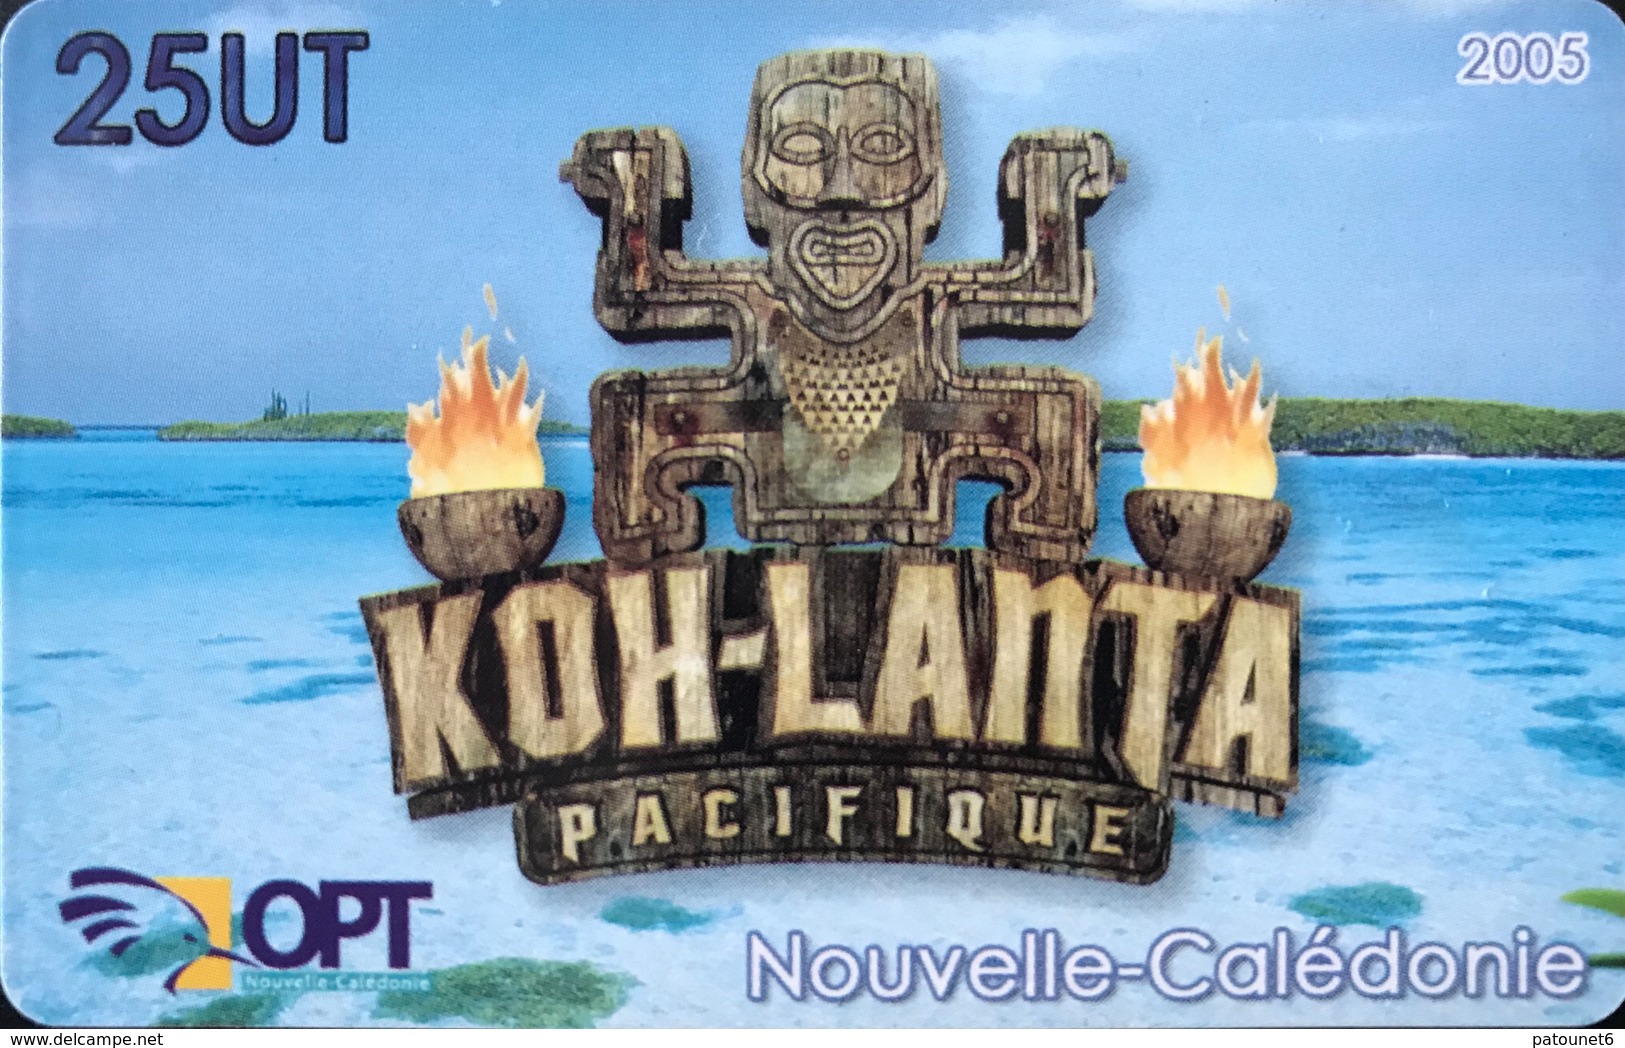 NOUVELLE CALEDONIE -  Phonecard  -  KOH-LANTA -  NC 134  -  25 Unités - Nueva Caledonia